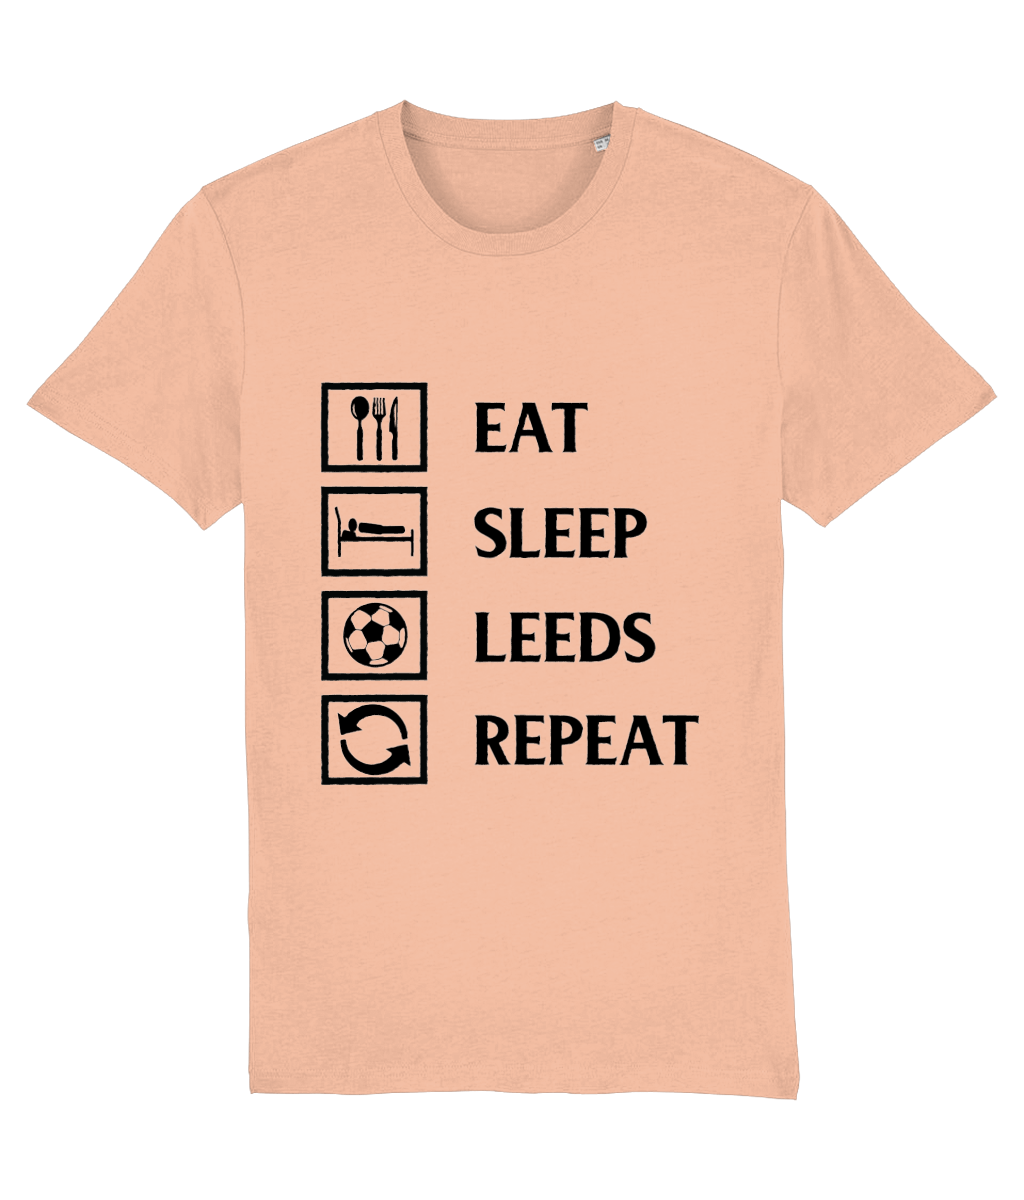 Eat, Sleep, Leeds, Repeat T-shirt Women